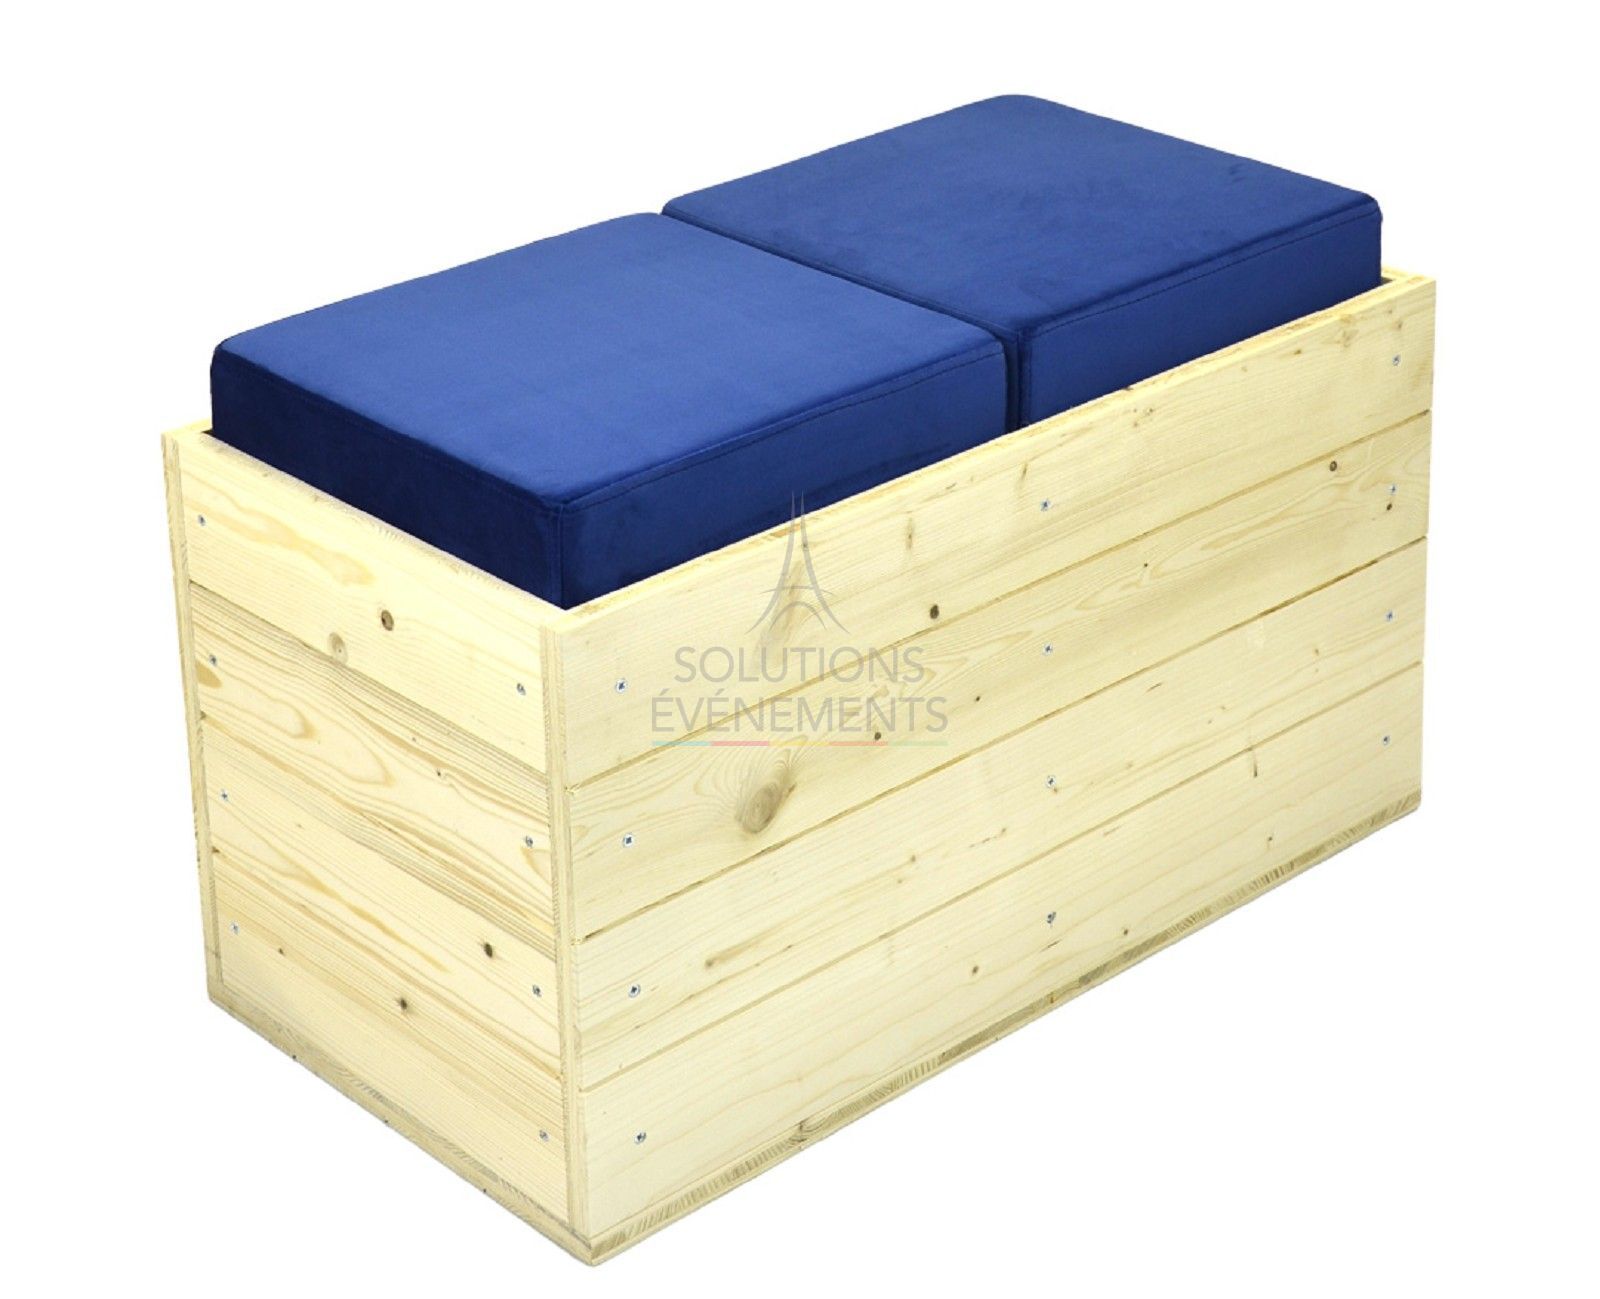 Rental of eco-responsible blue velvet wooden bench